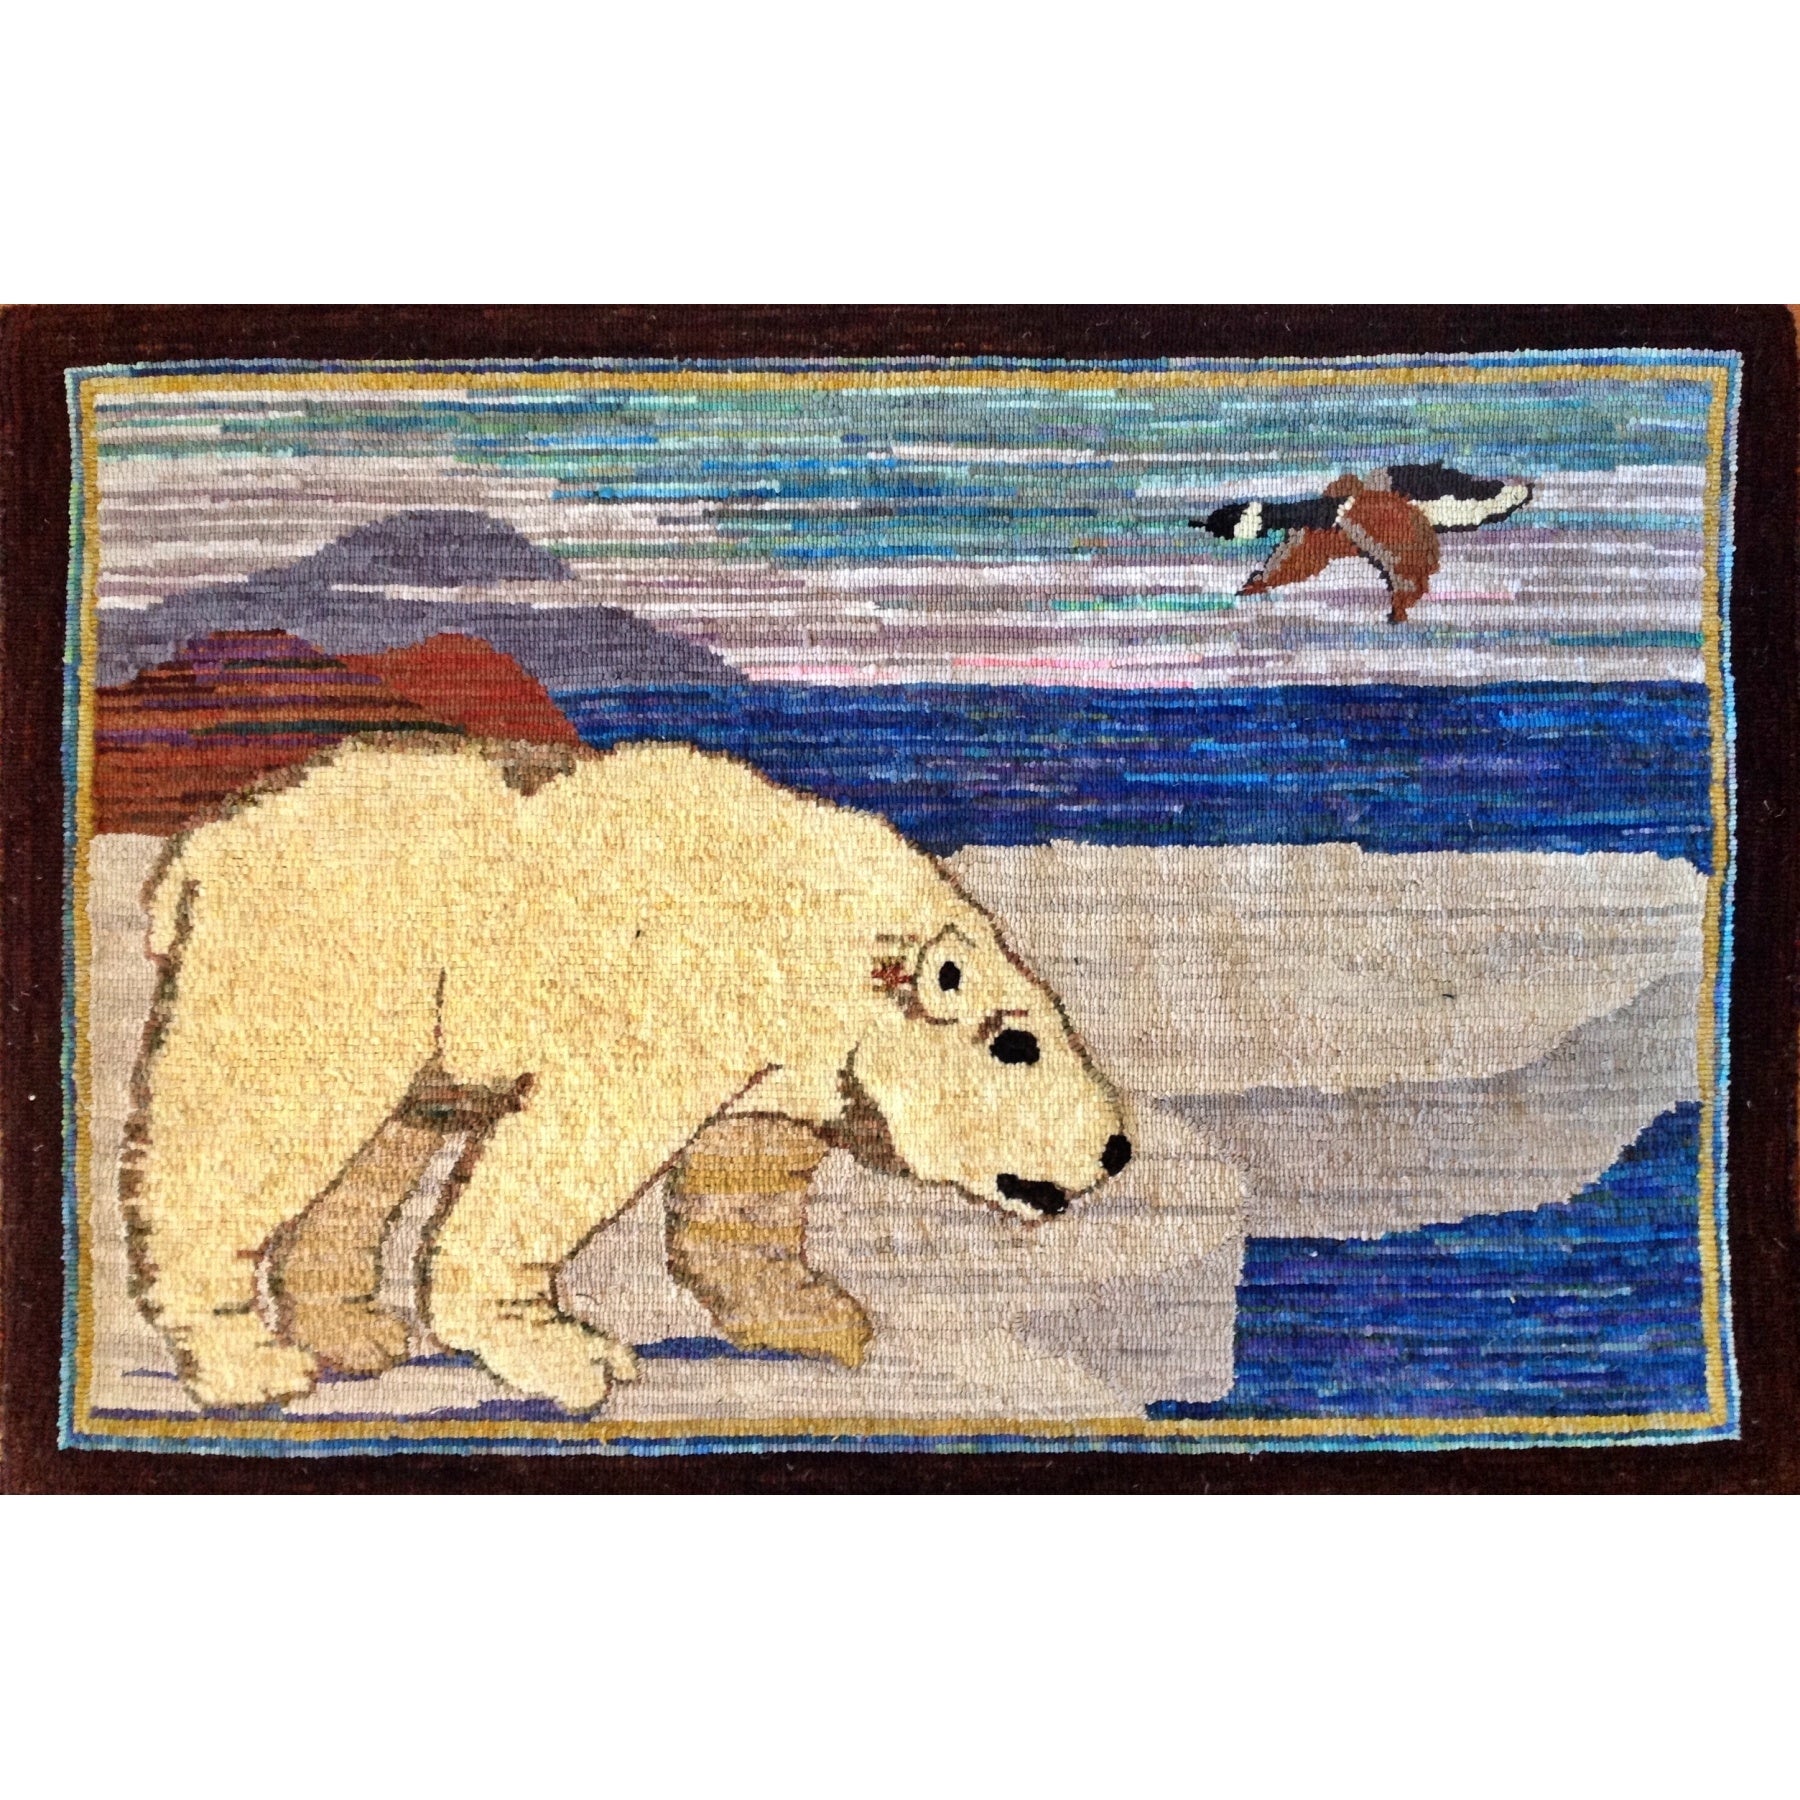 Polar Bear-Grenfell Style, rug hooked by Mary Schnitzler